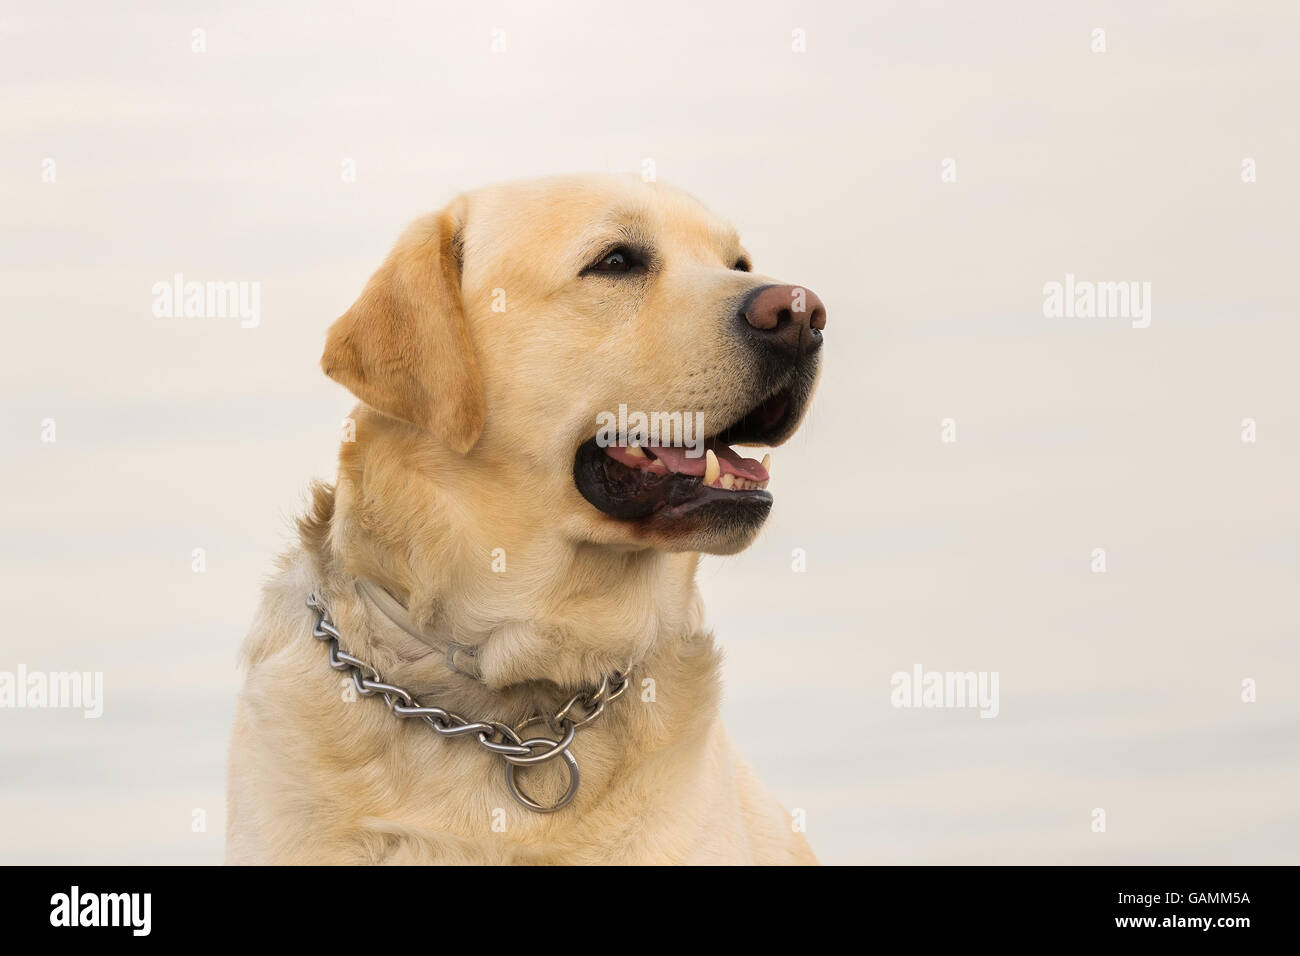 Labrador dog portrait against the blurred sea. Stock Photo